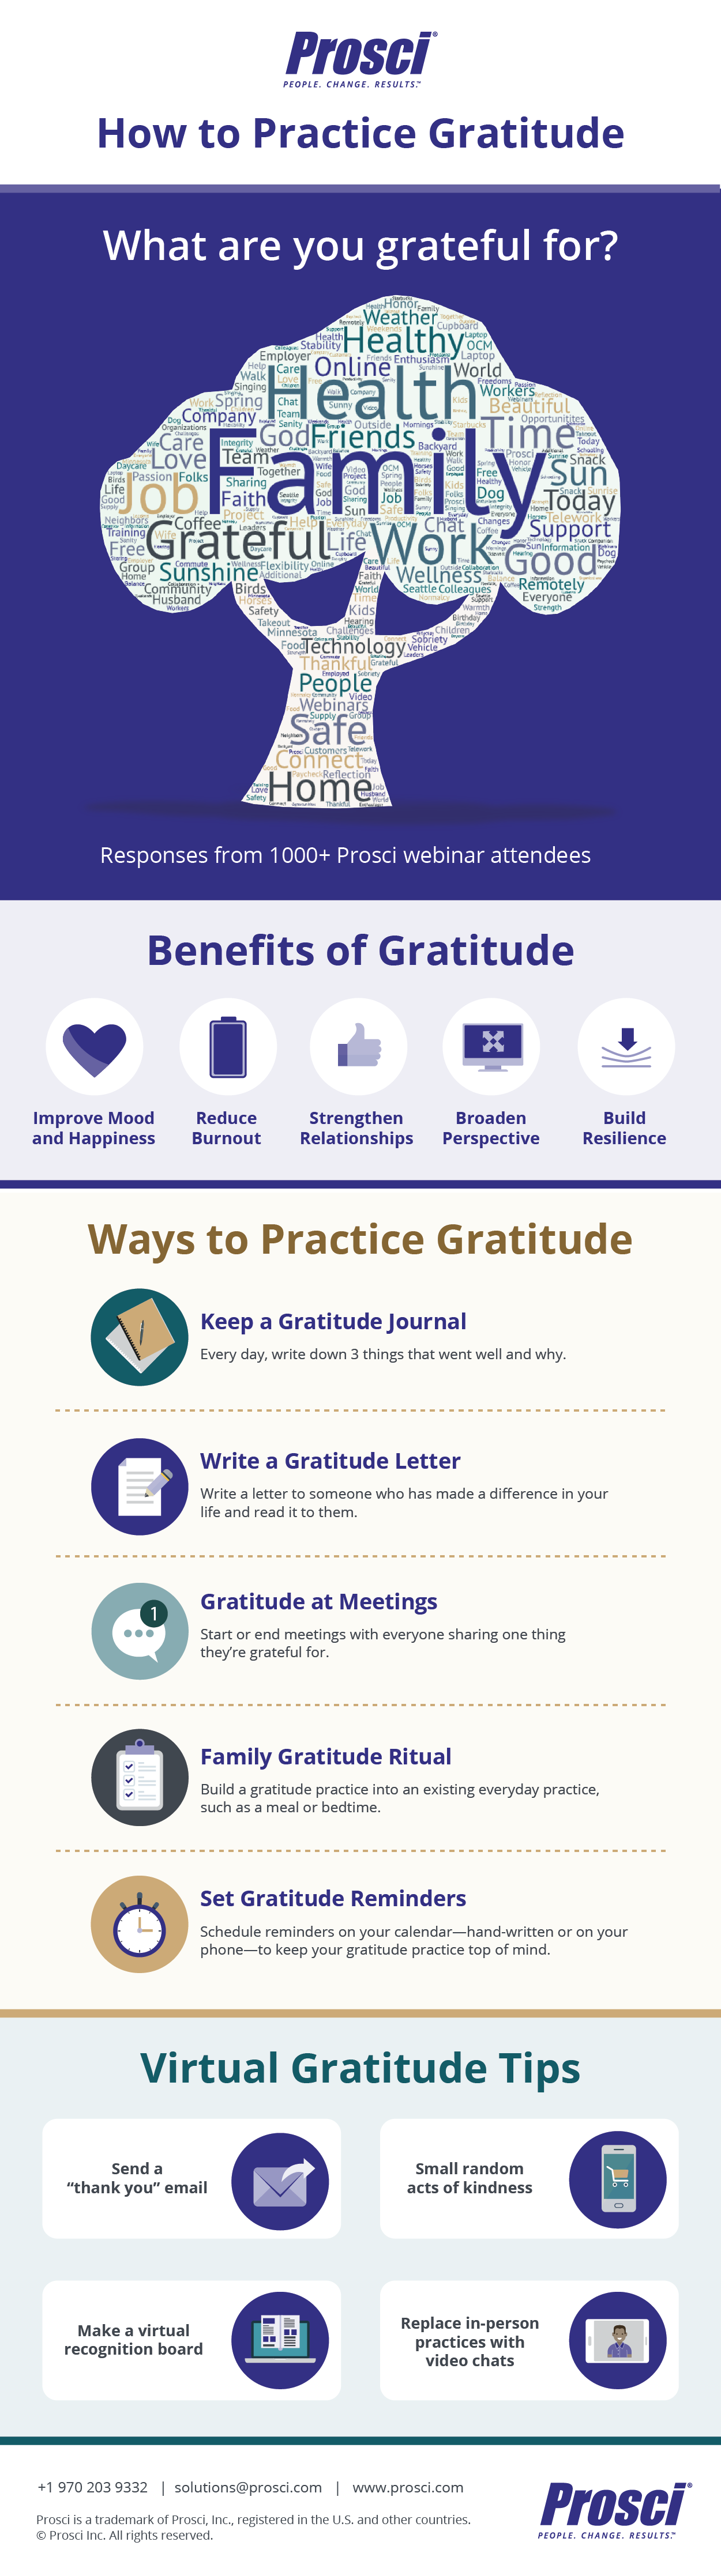 Prosci-Gratitude-Infographic-150dpi